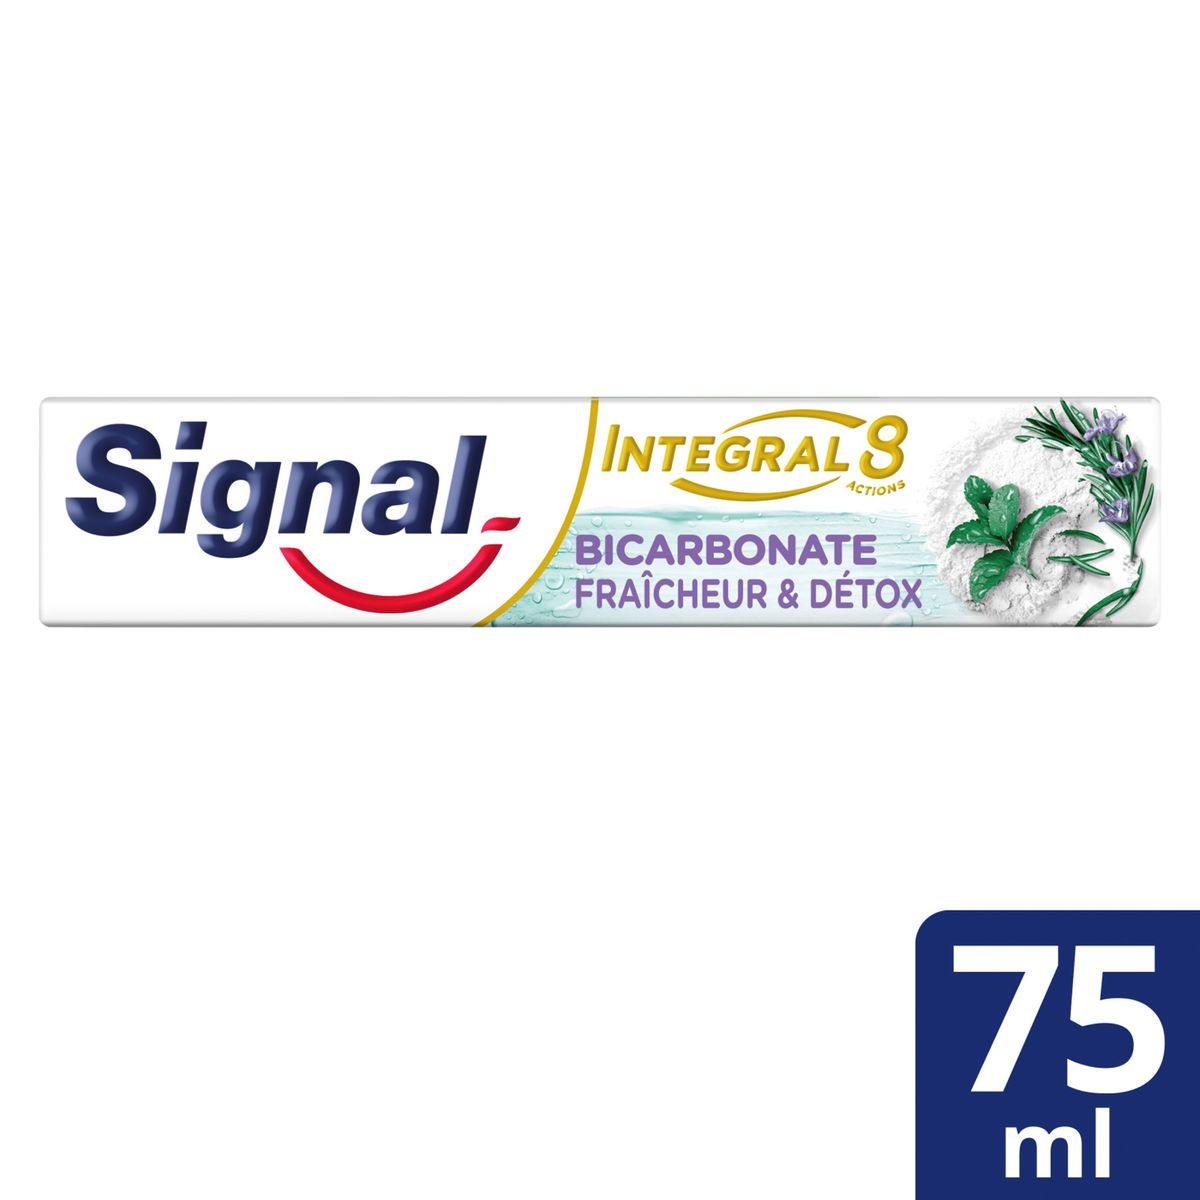 Signal Integral 8 Nature Elements Dentifrice Bicarbonate 75 ml